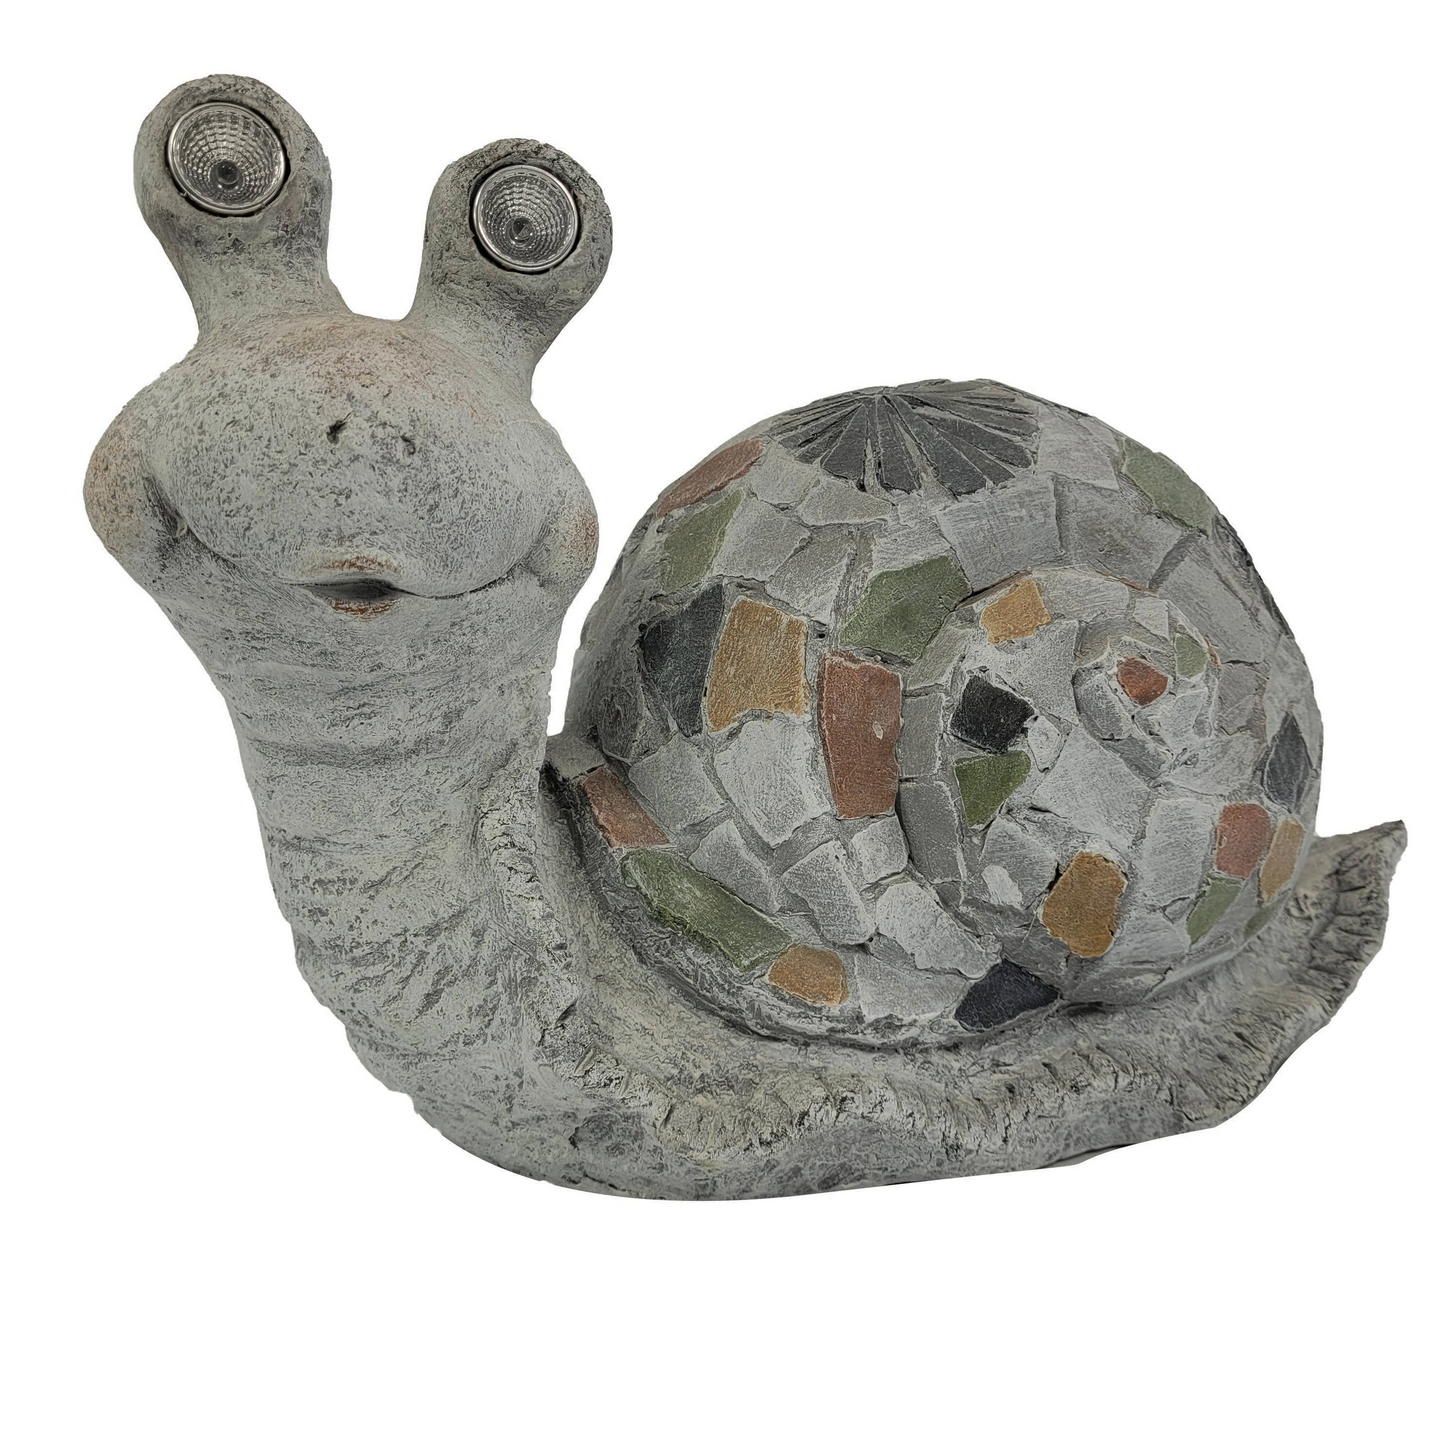 Grey Mosaic Design Garden Snails Statue w Solar Power Light Eyes Faux Stone Finish 14x7x10"